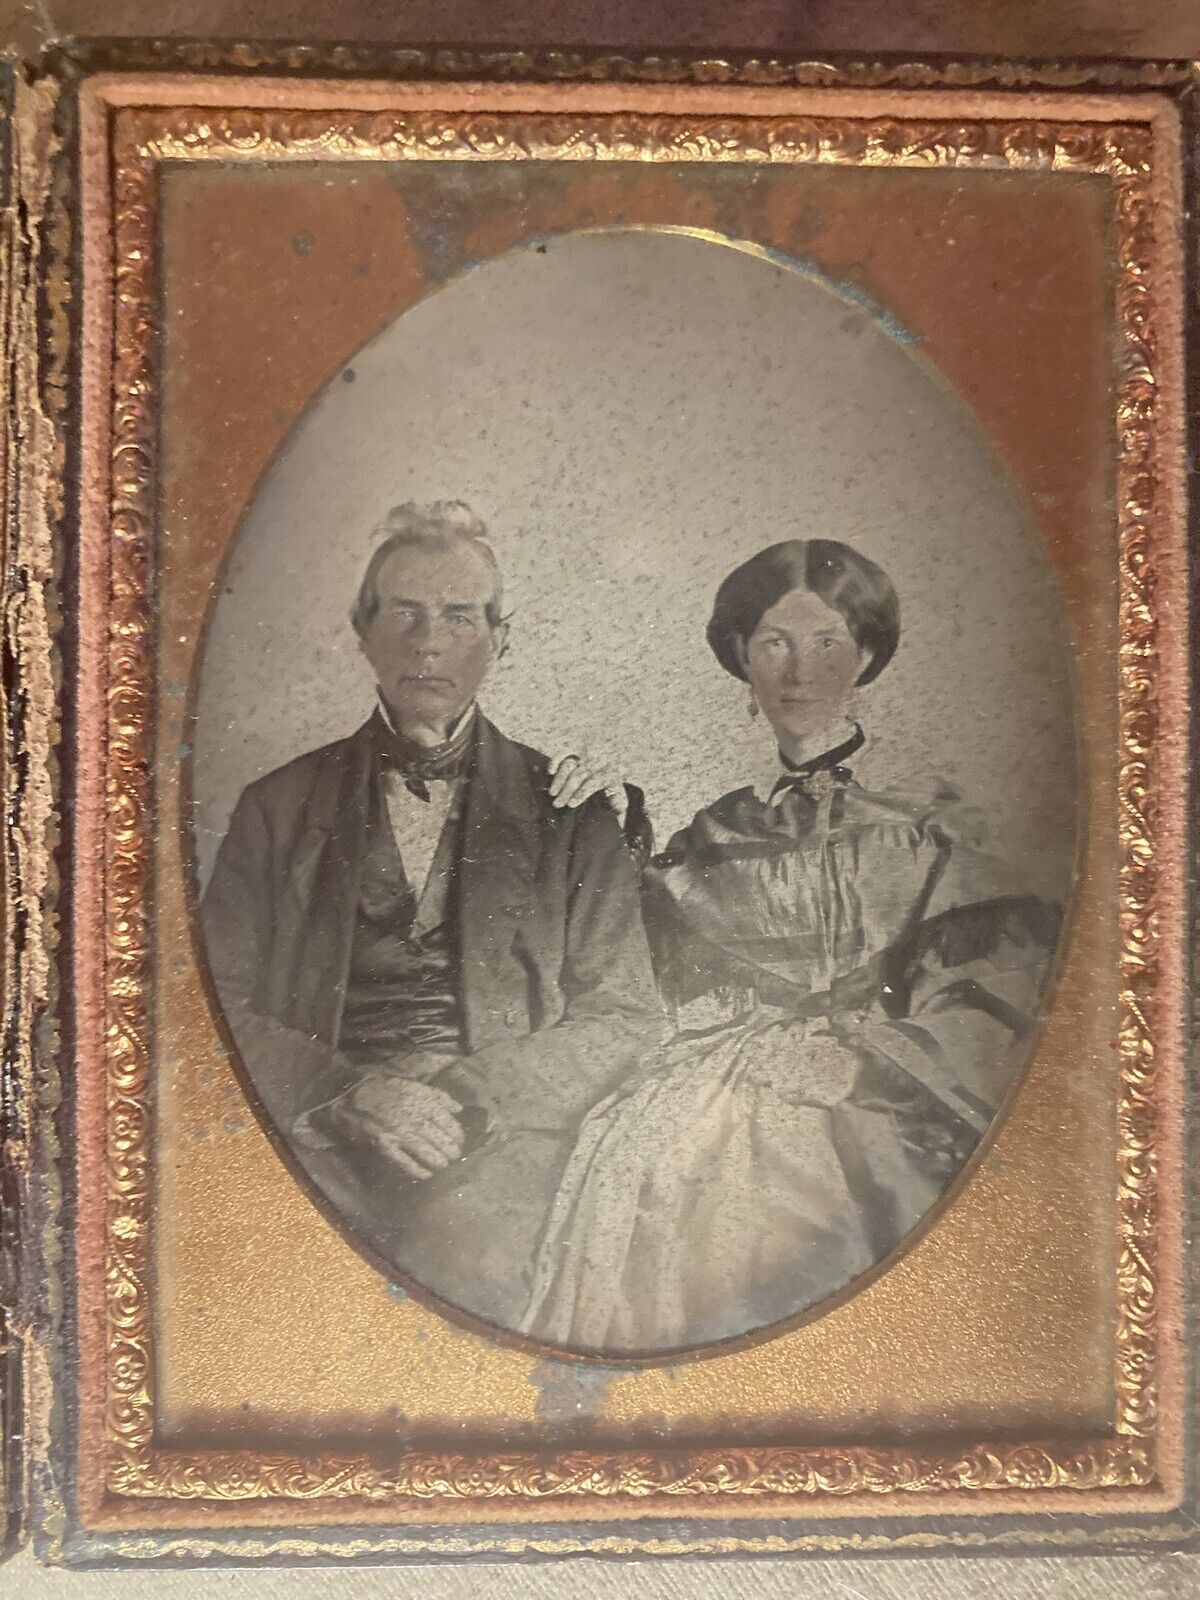 Daguerreotype of Joseph Smith Jr. and wife Emma Smith rare key Mormon artifact